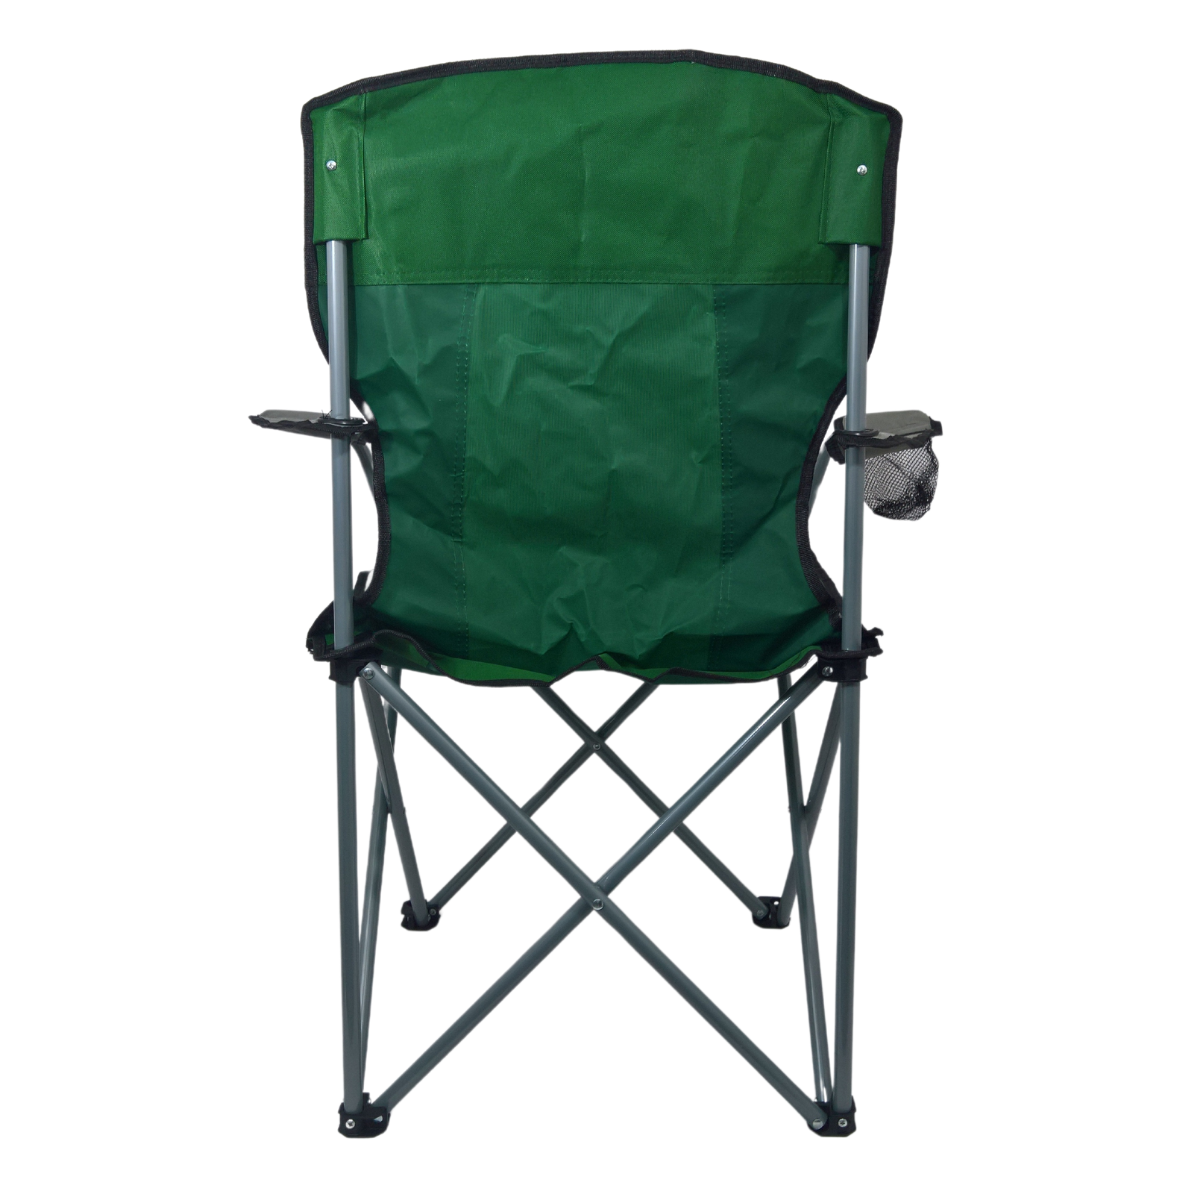 Cadeira para Camping Dobravel Portatil Voyager 120kg Vde/cza Lu0097_vd - 4